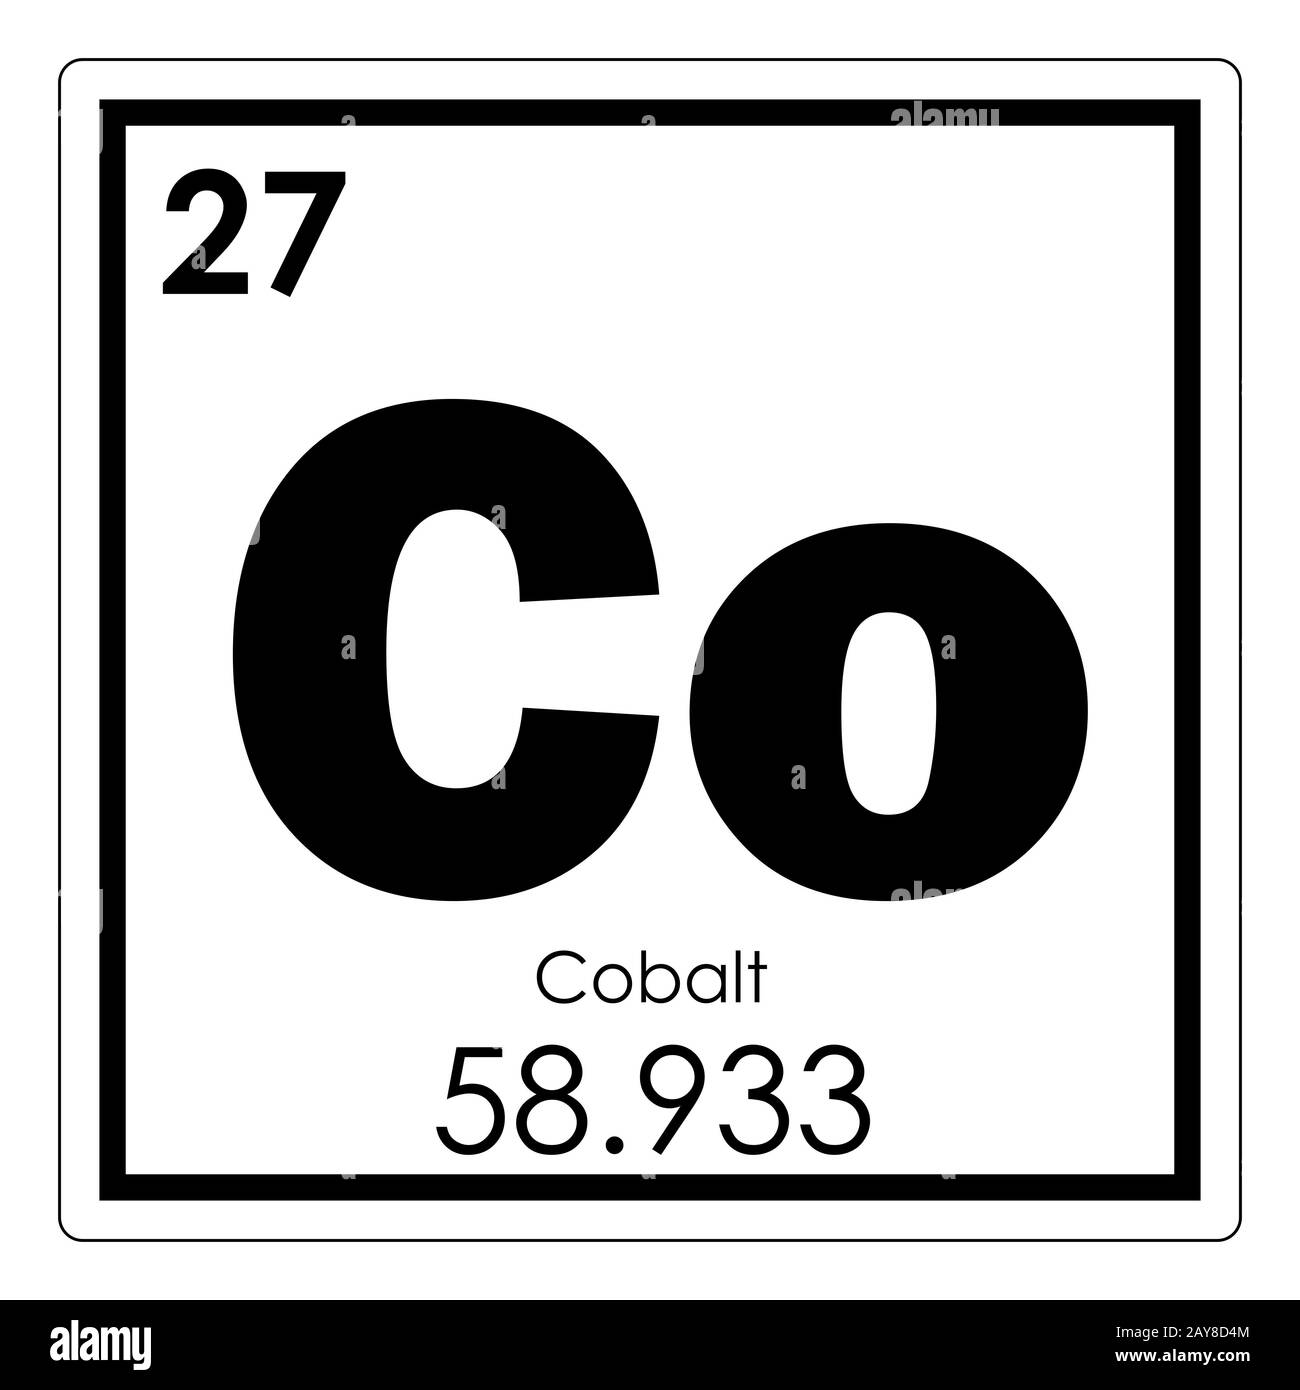 Cobalt chemical element Stock Photo